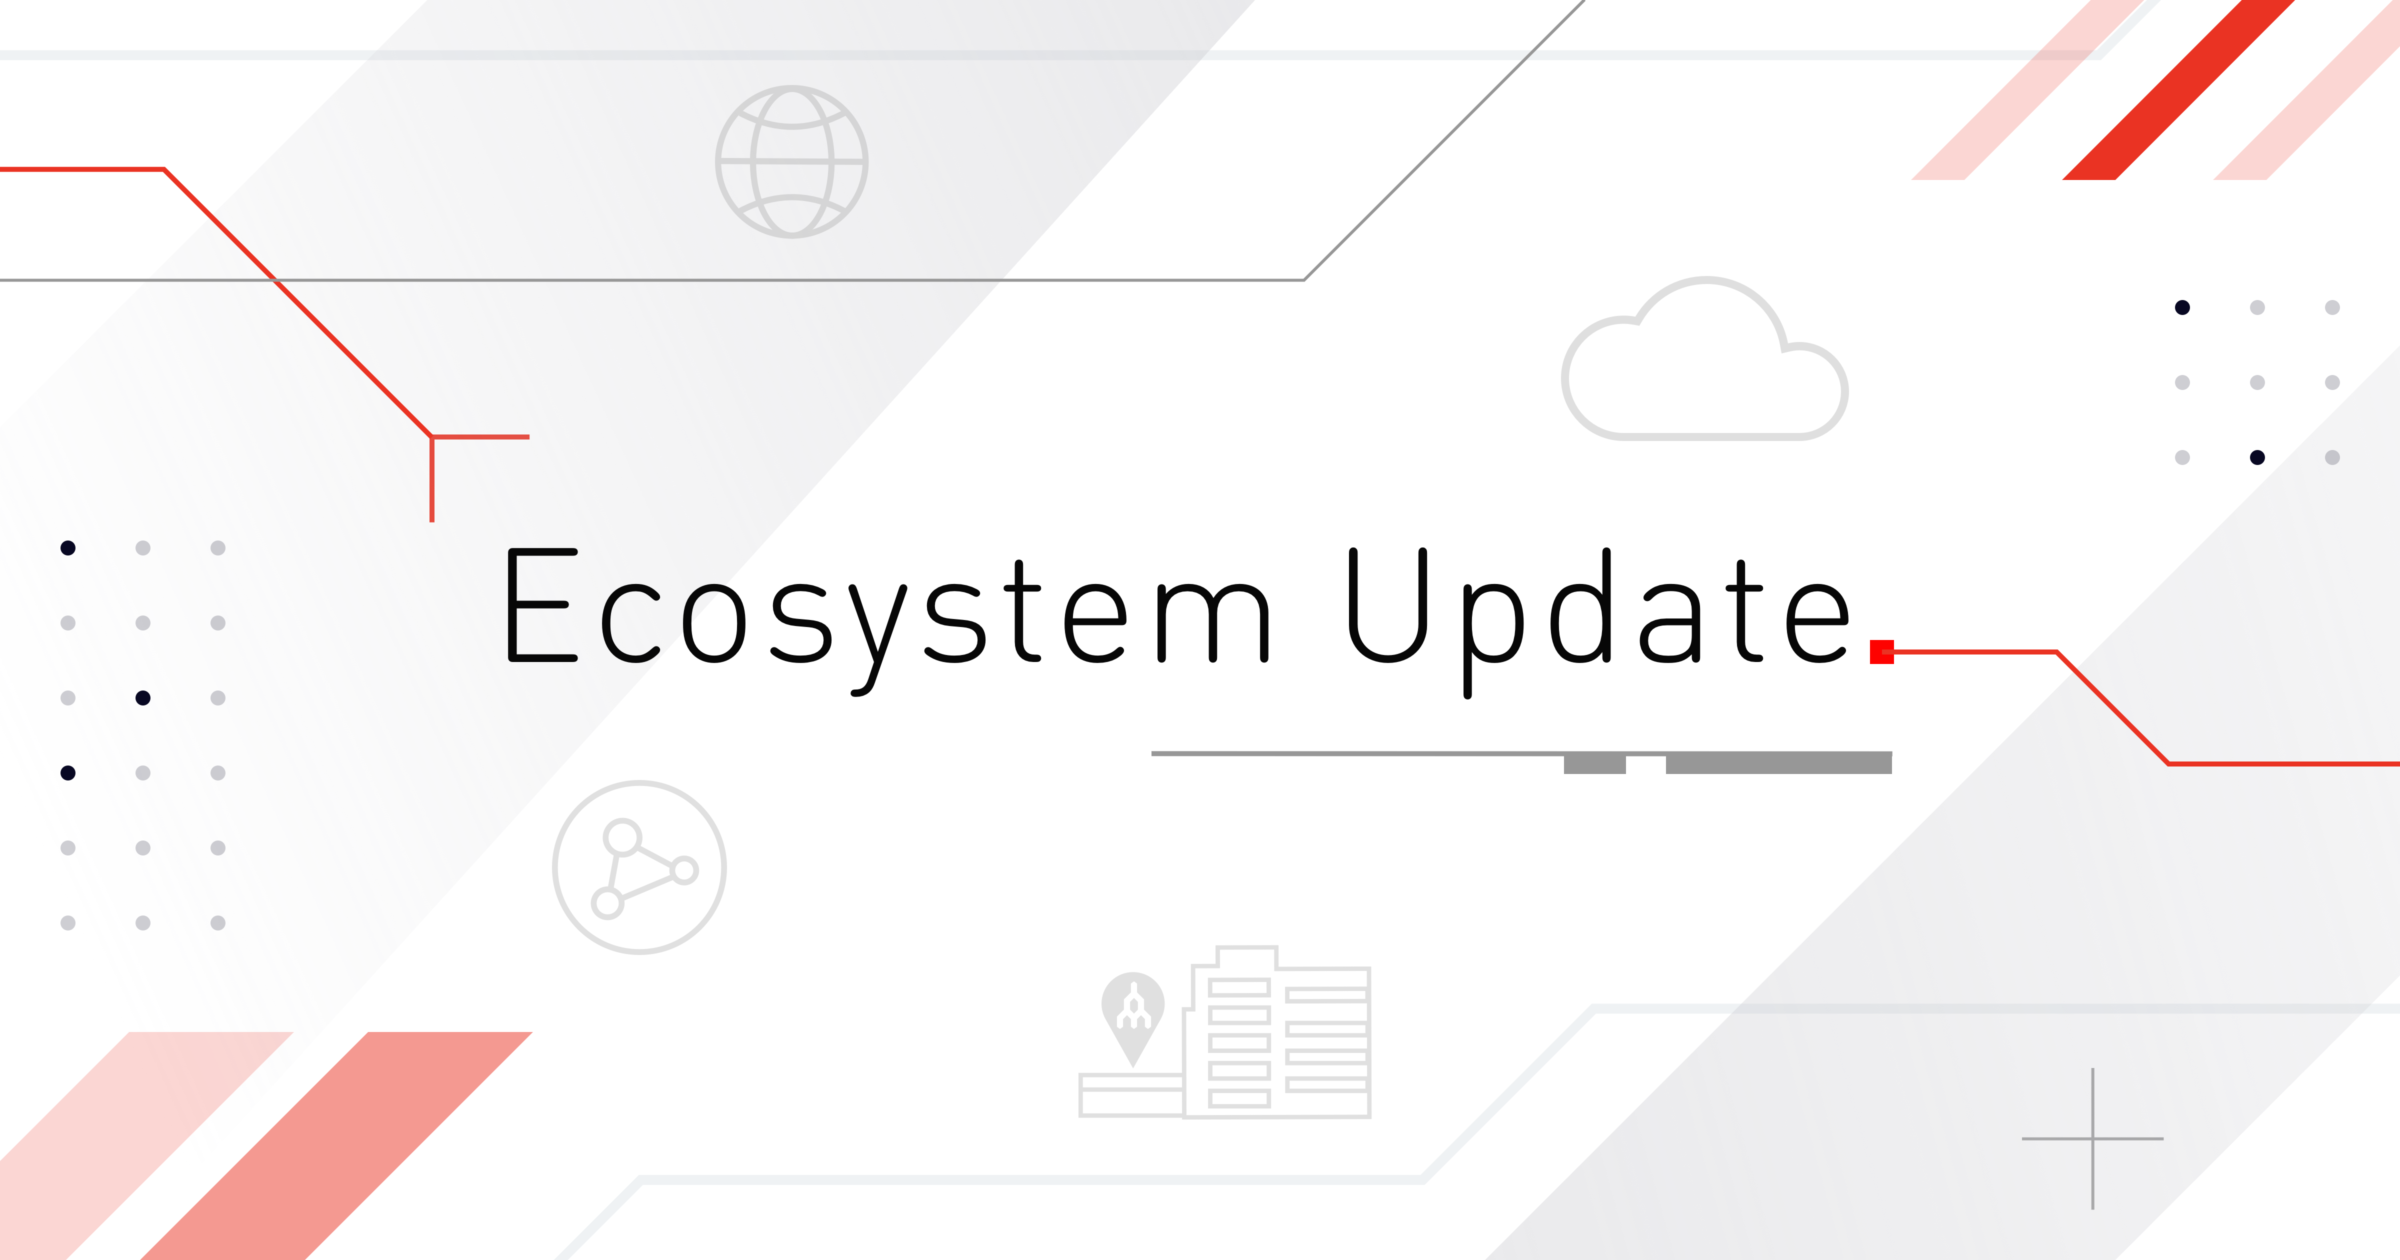 Ecosystem Update